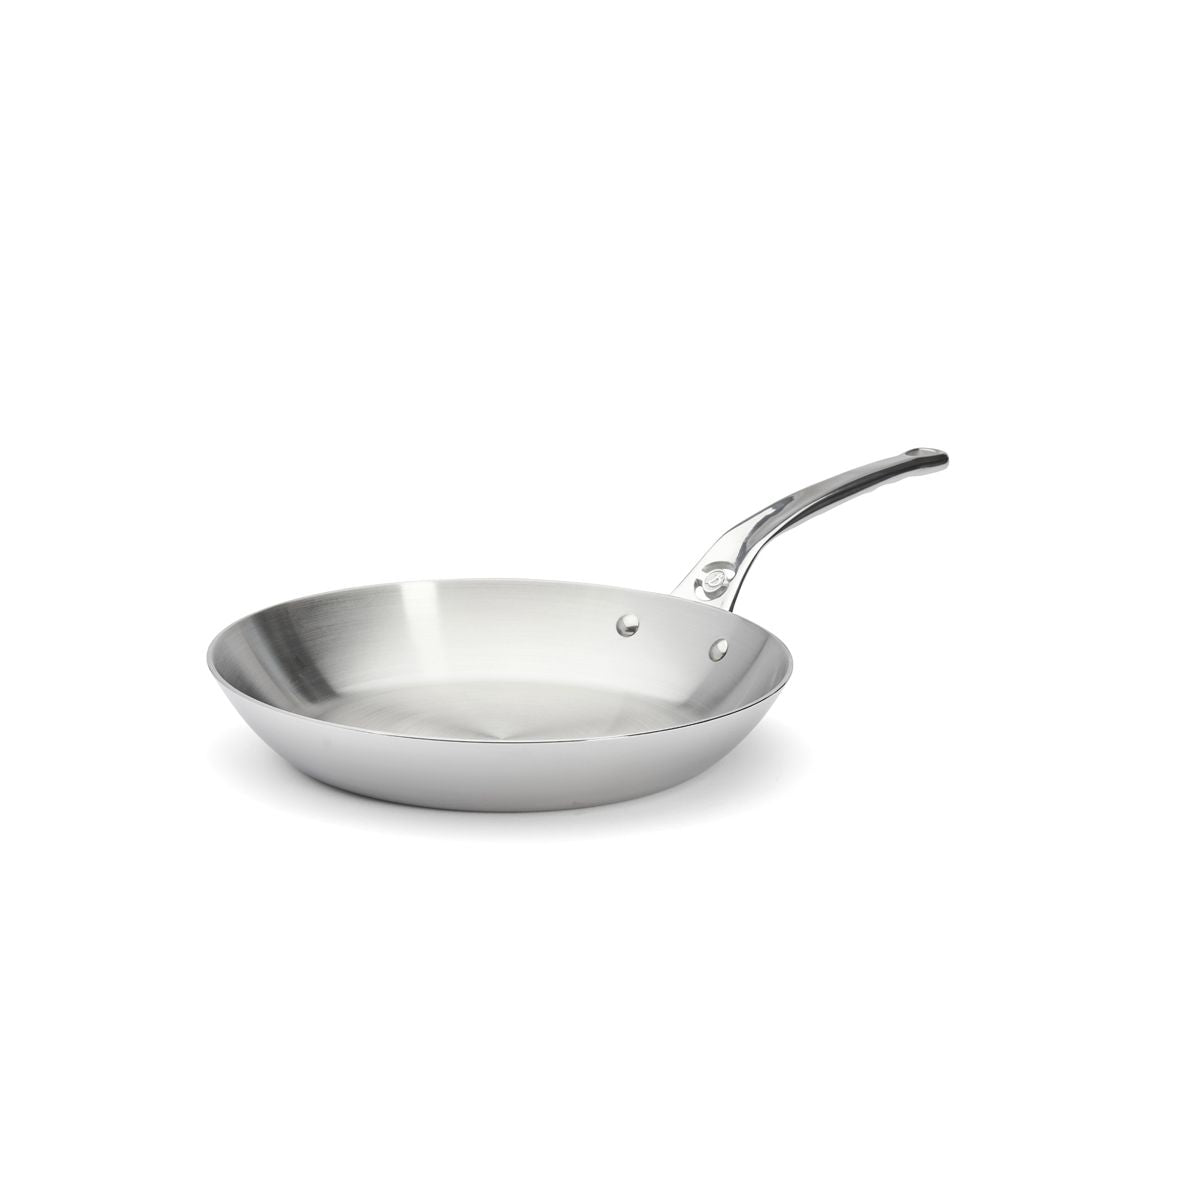 Affinity frying pan